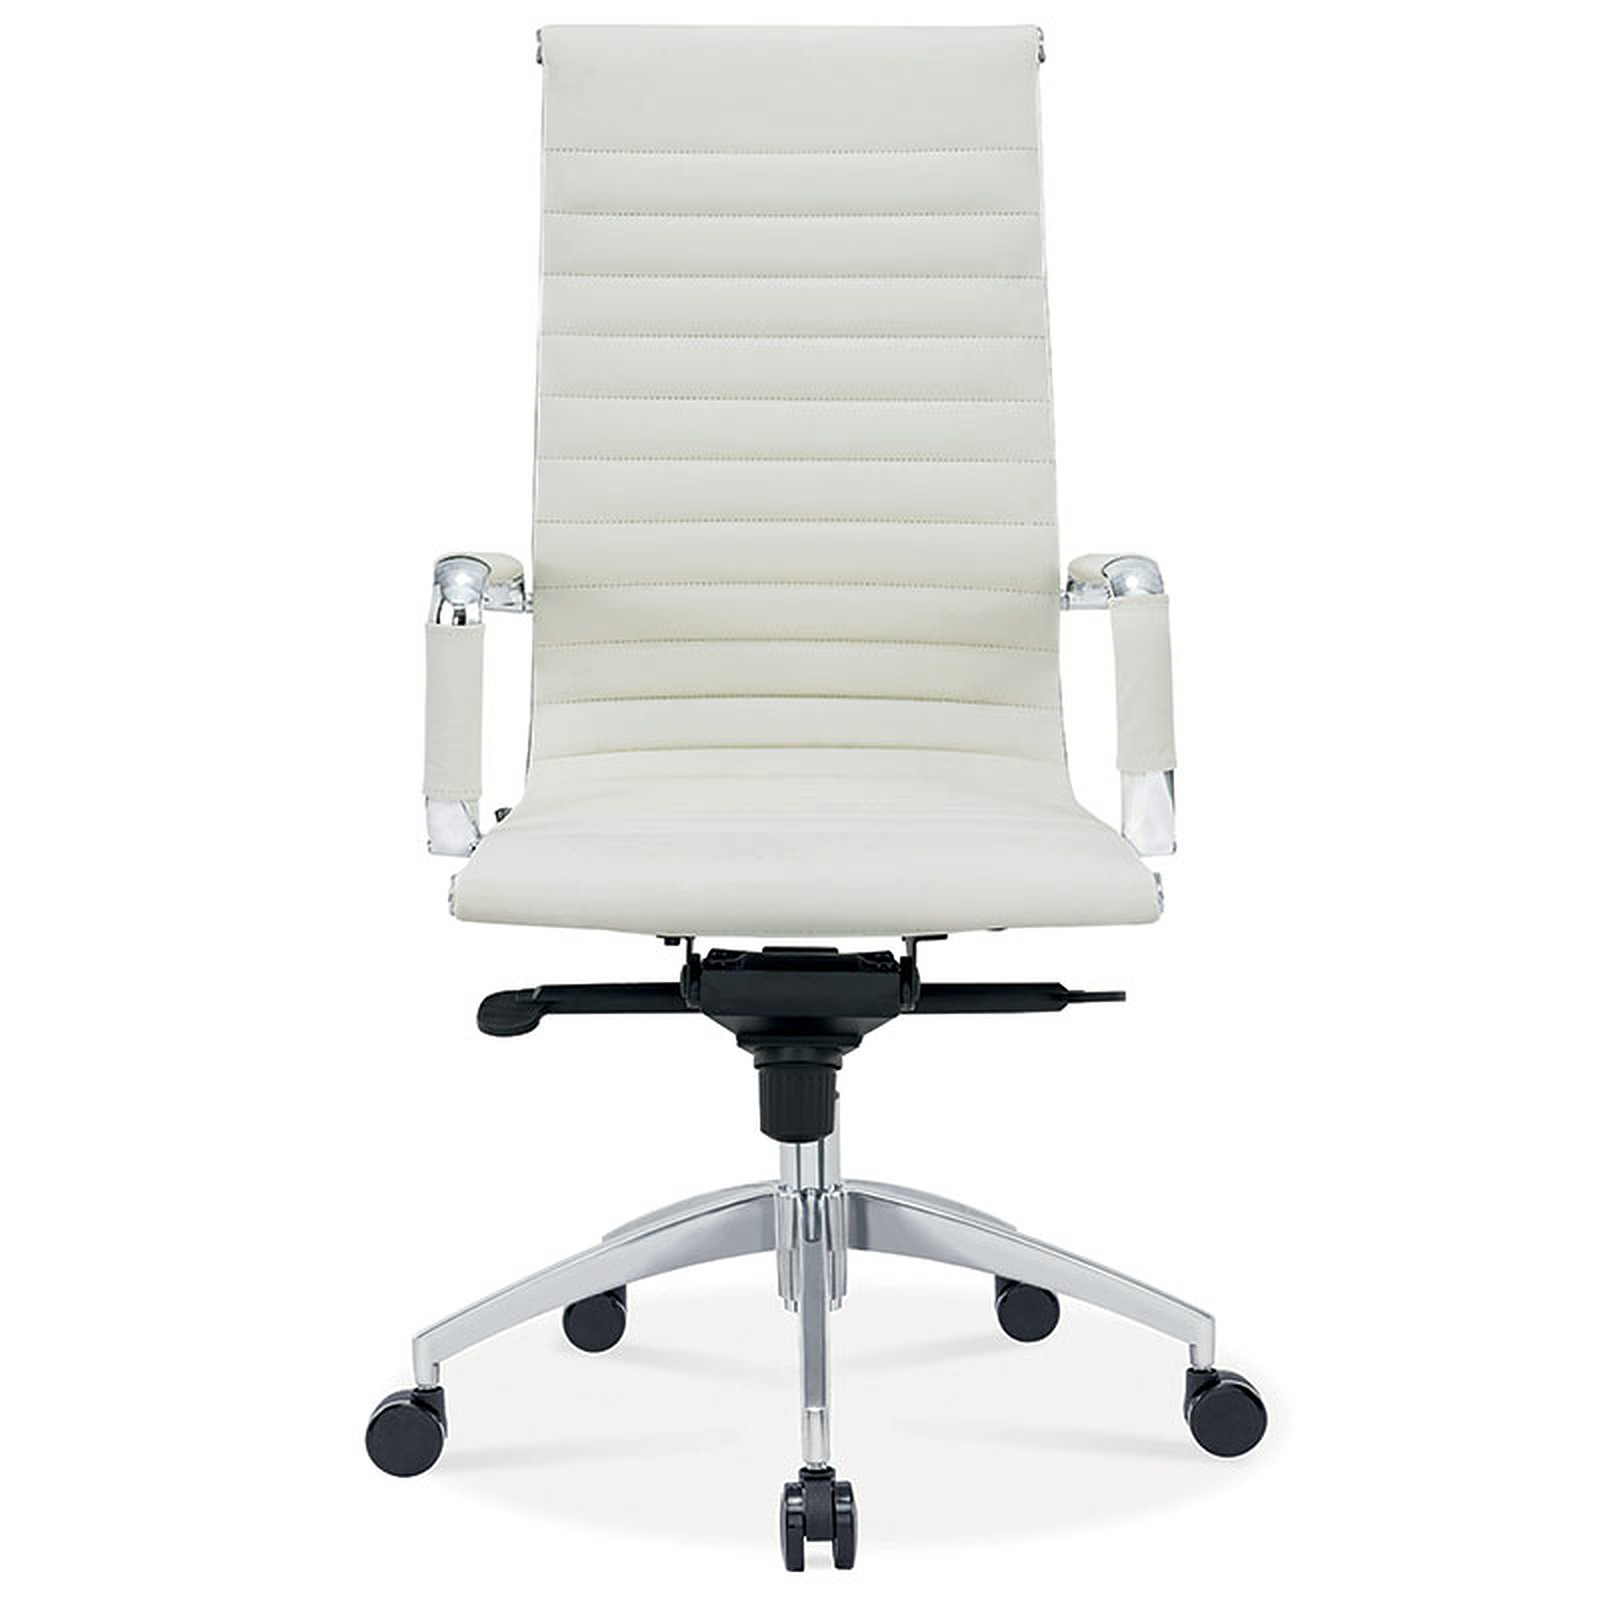 MTi Fauteuil MTGA65X dossier haut en cuir blanc - Chaise de bureau MT international